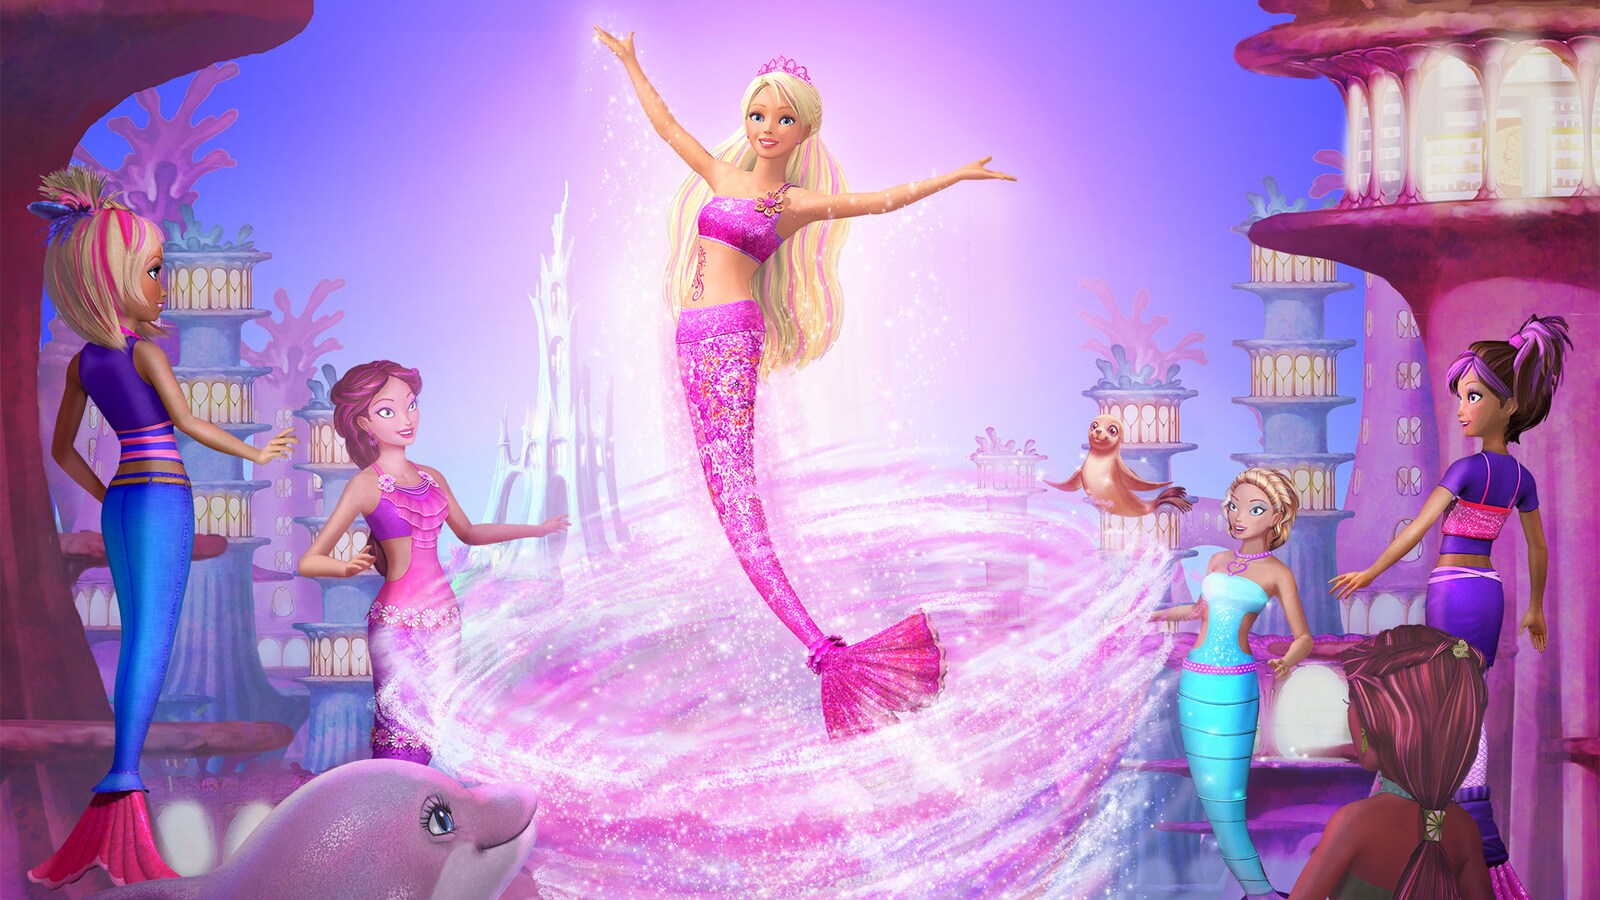 entanglement Recept kløft Se Barbie i et havfrueeventyr online - Viaplay